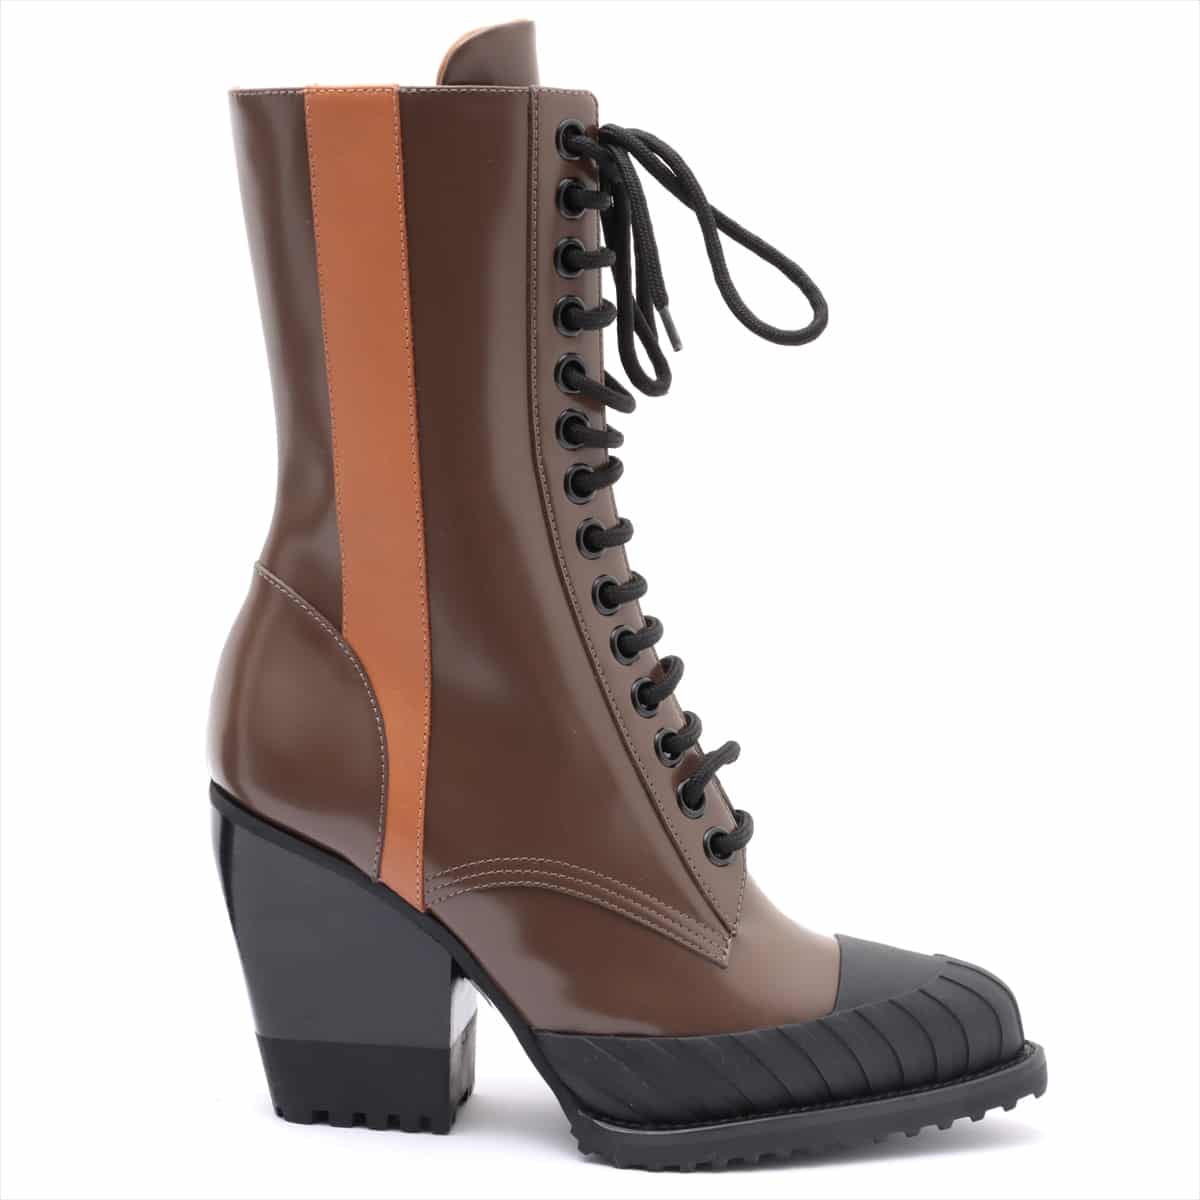 Chloe Leather Boots 38 Ladies' Brown